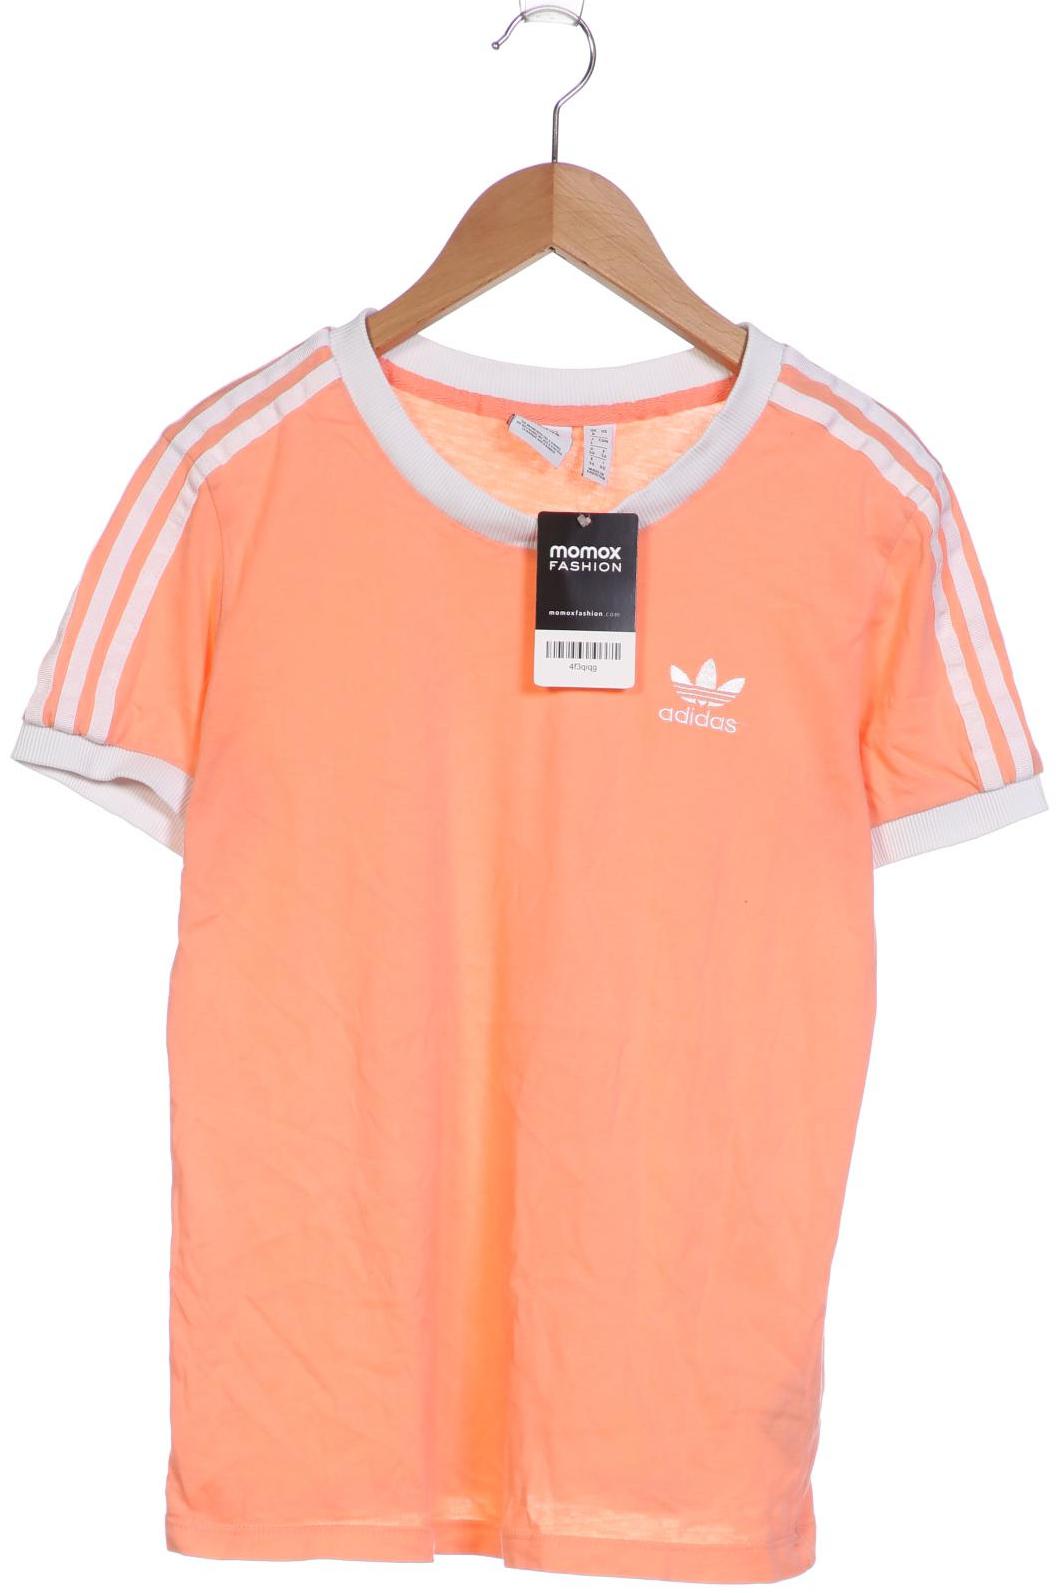 adidas Originals Damen T-Shirt, orange von adidas Originals